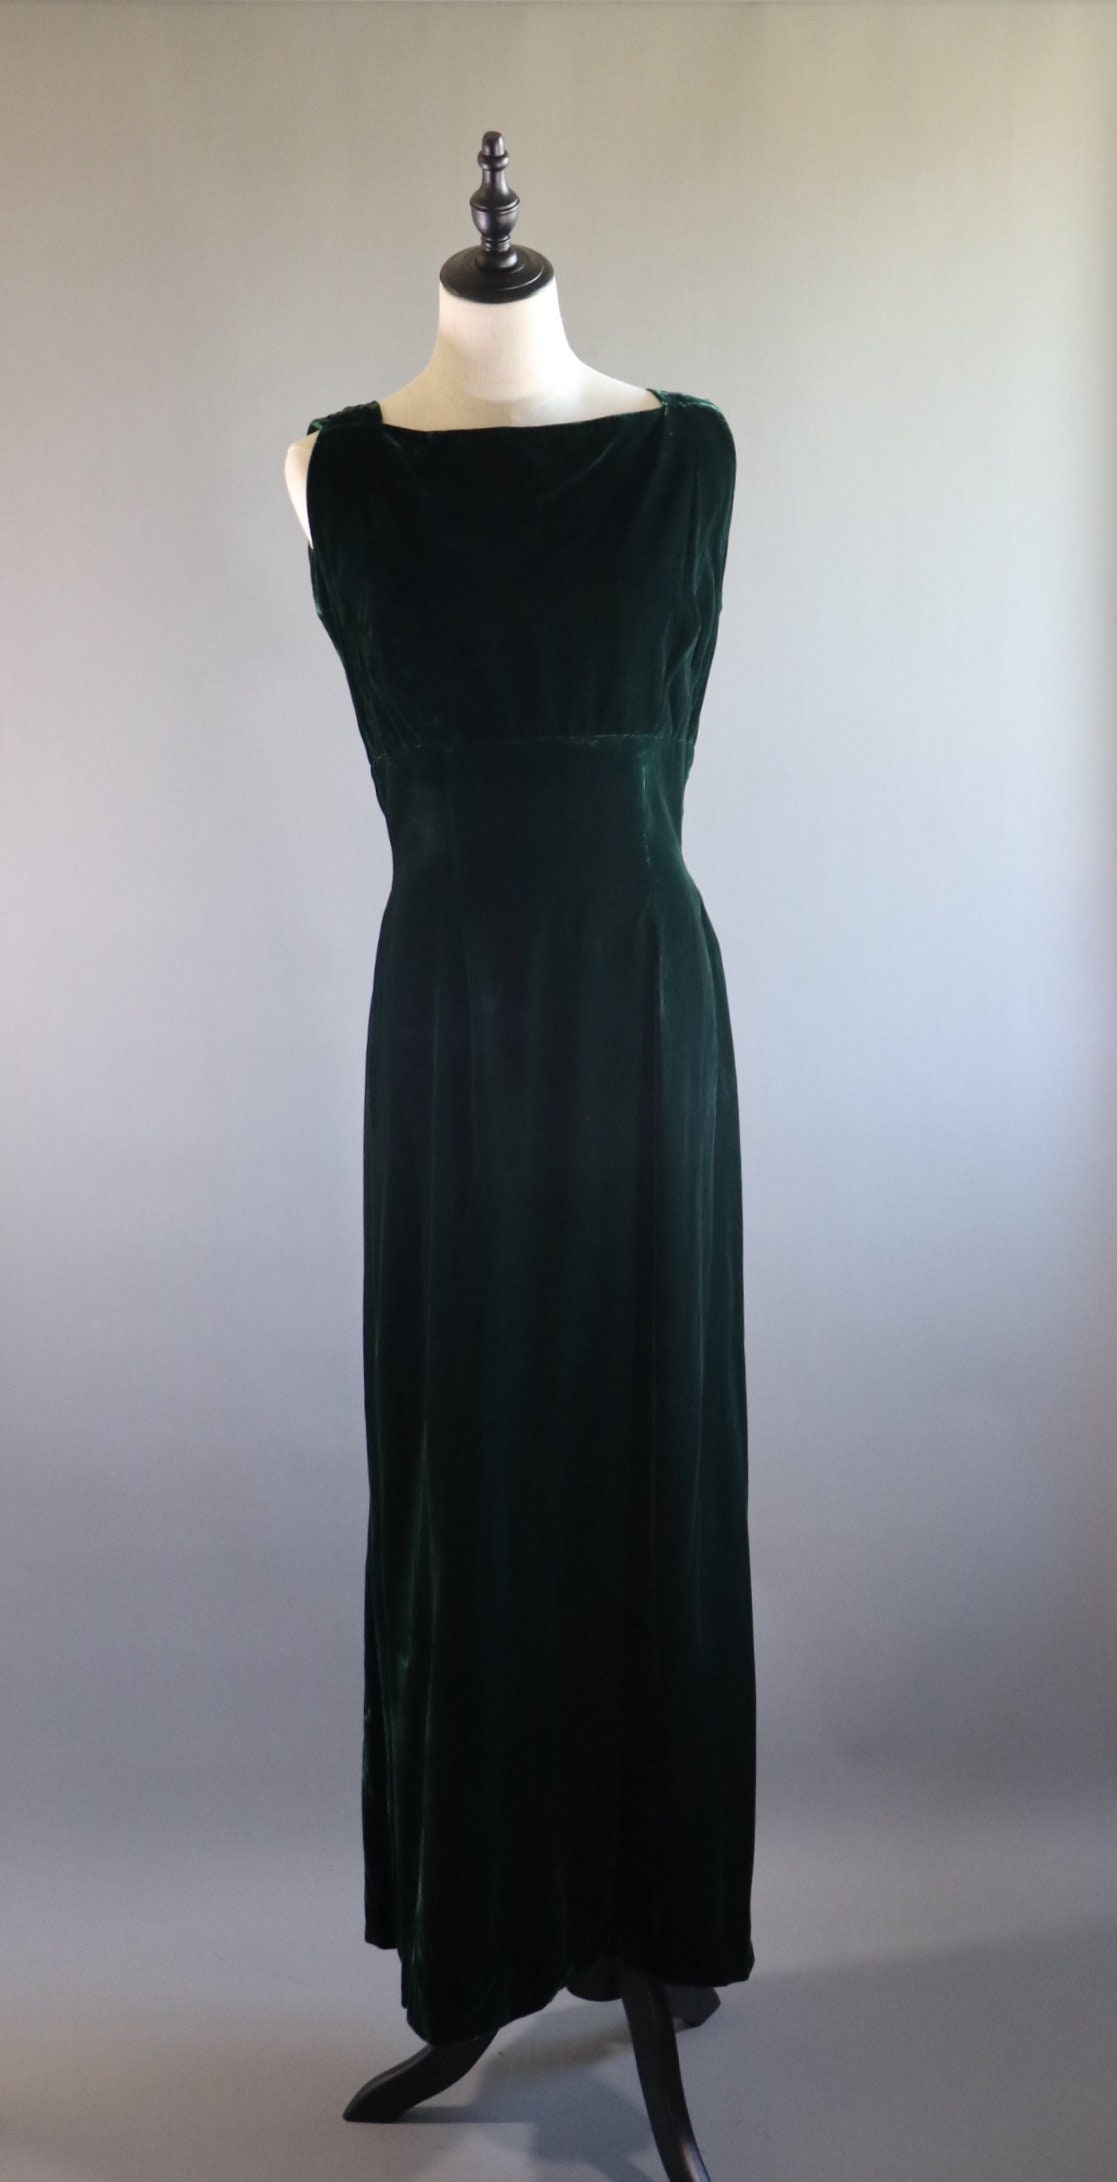 SALE Emerald Green 1970s Dress 70s dress 1970s seventies | Etsy